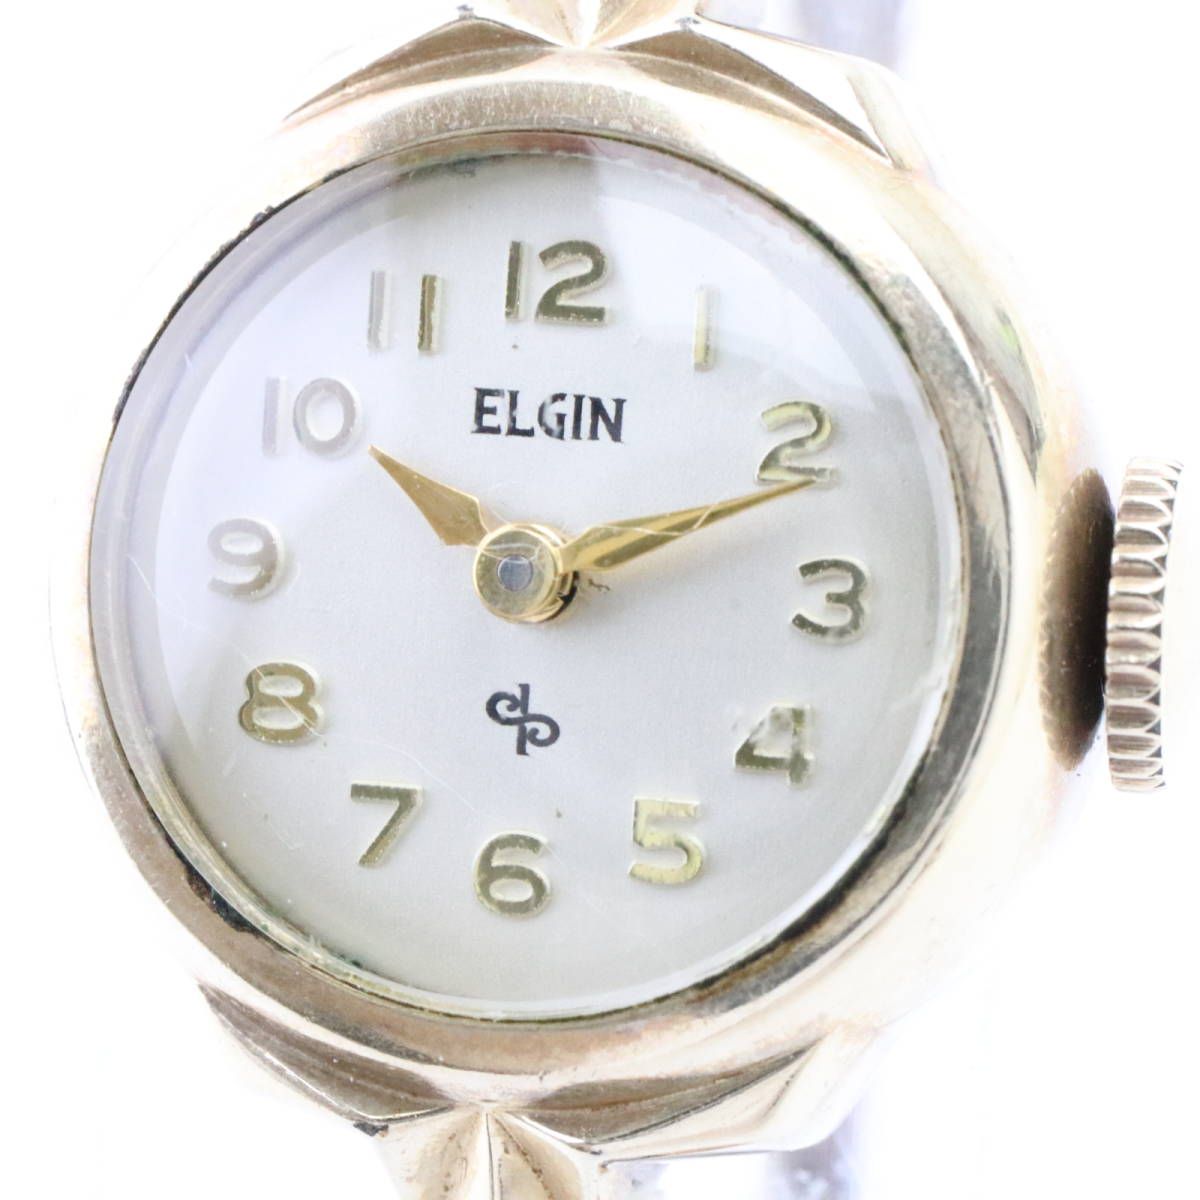  G880T エルジン ELGIN レディース 手巻き 腕時計 丸型 伸縮ベルト